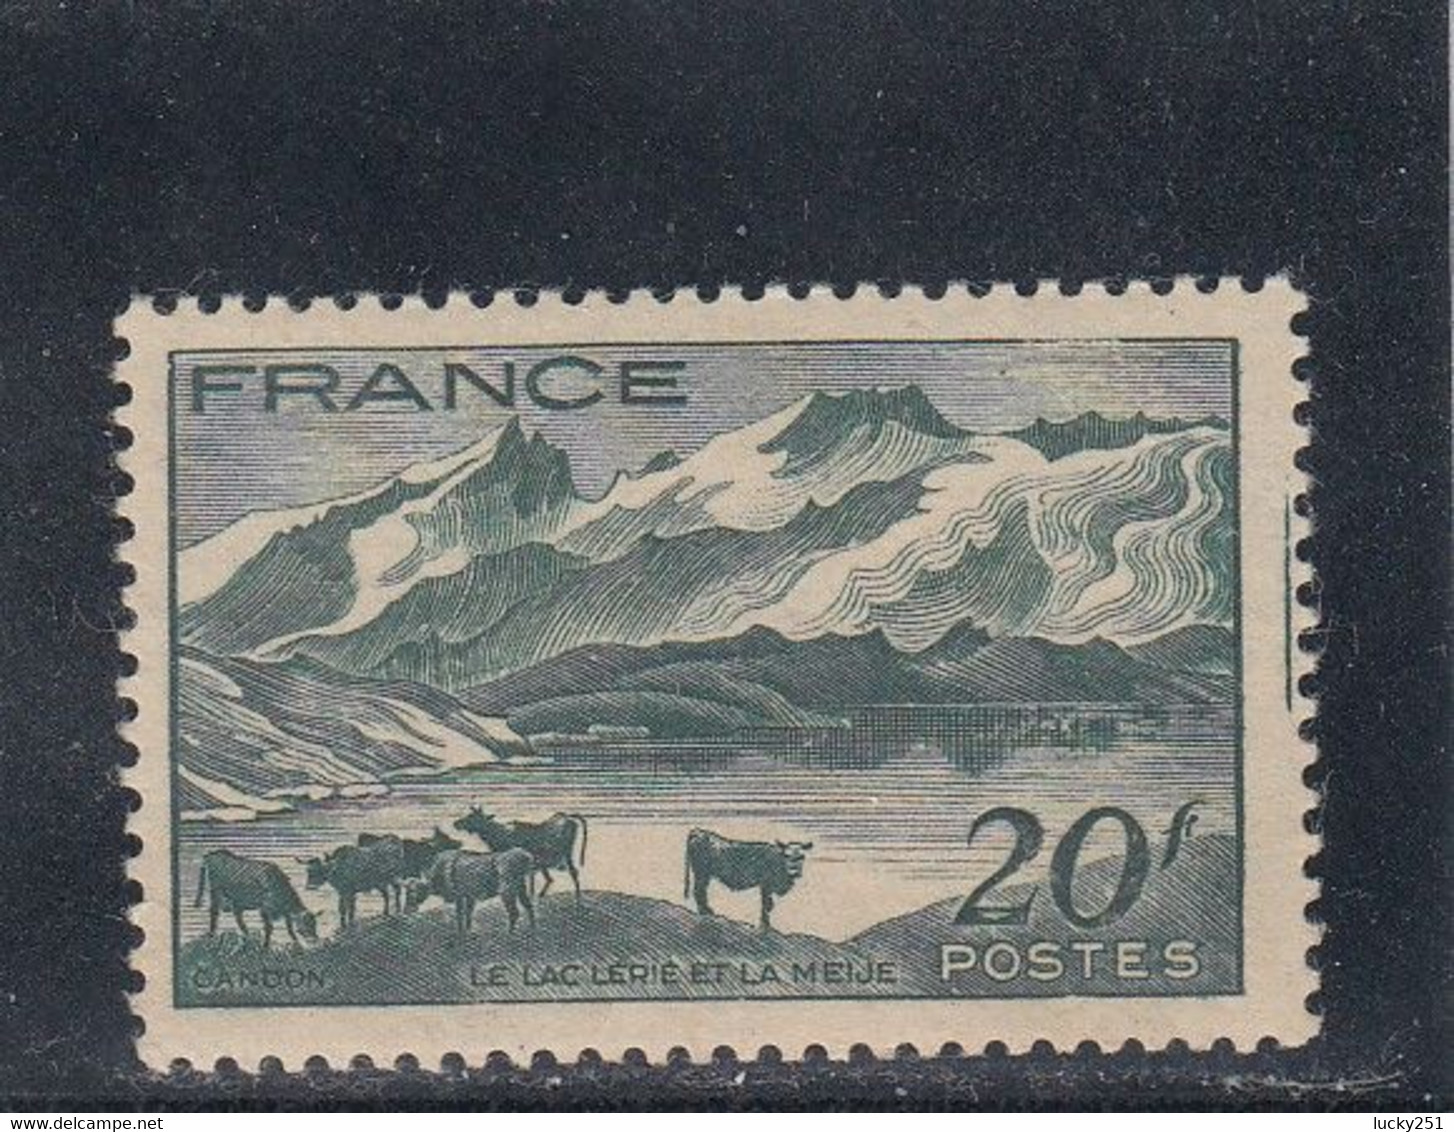 France - Année 1943 - Neuf** - N°YT 582** - Paysage Du Dauphiné - Nuovi